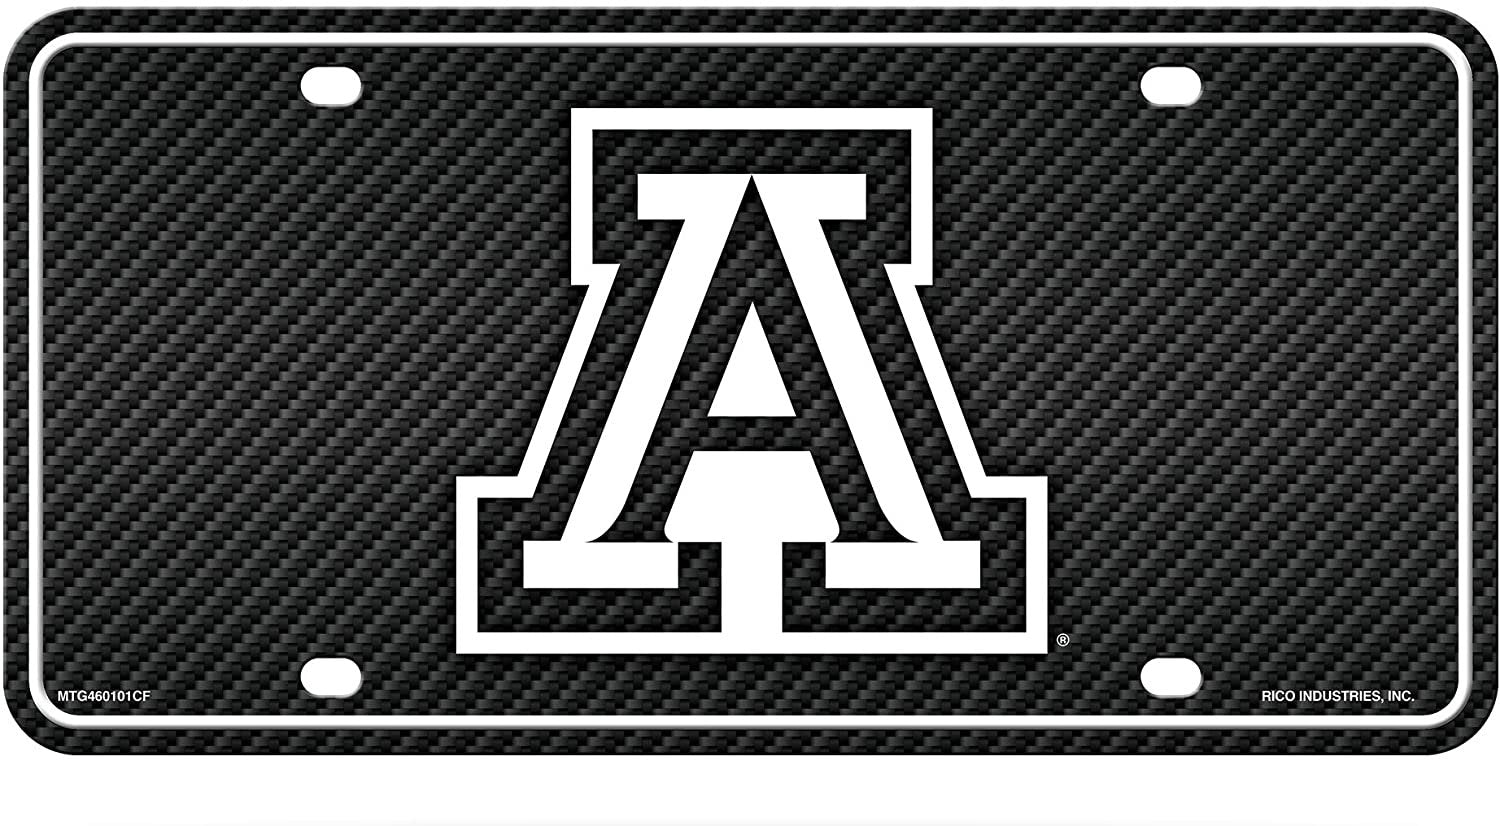 University of Arizona Wildcats Metal Auto Tag License Plate, Carbon Fiber Design, 6x12 Inch